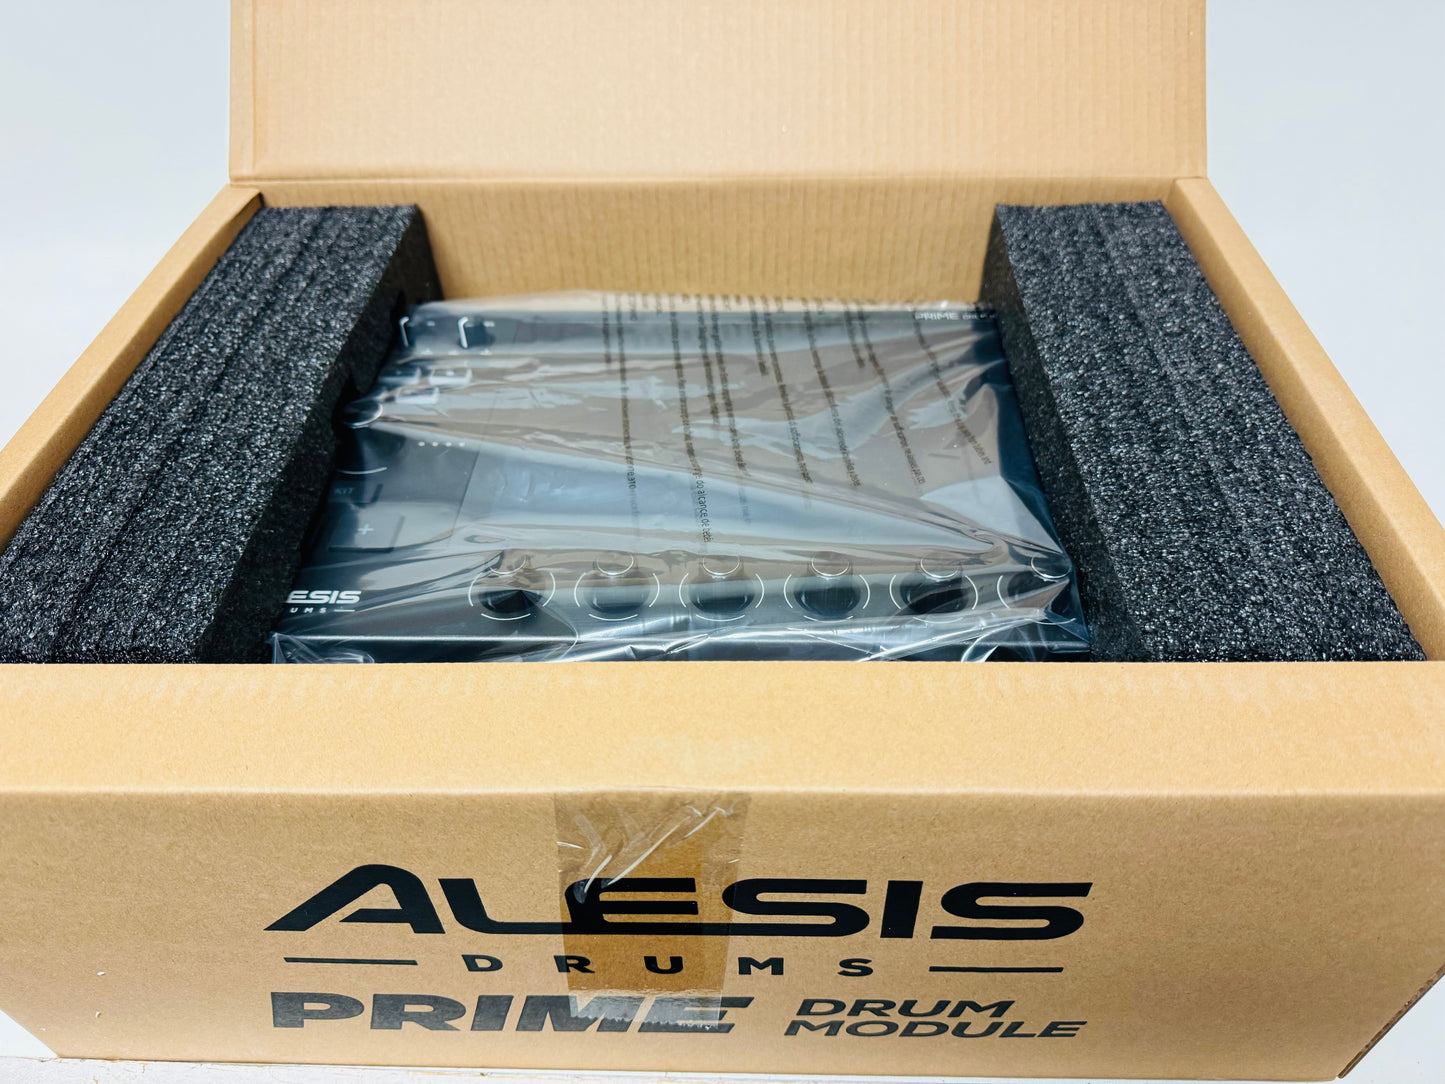 Alesis Strata Prime Drum Module and Hi Hat Cymbal OPEN BOX